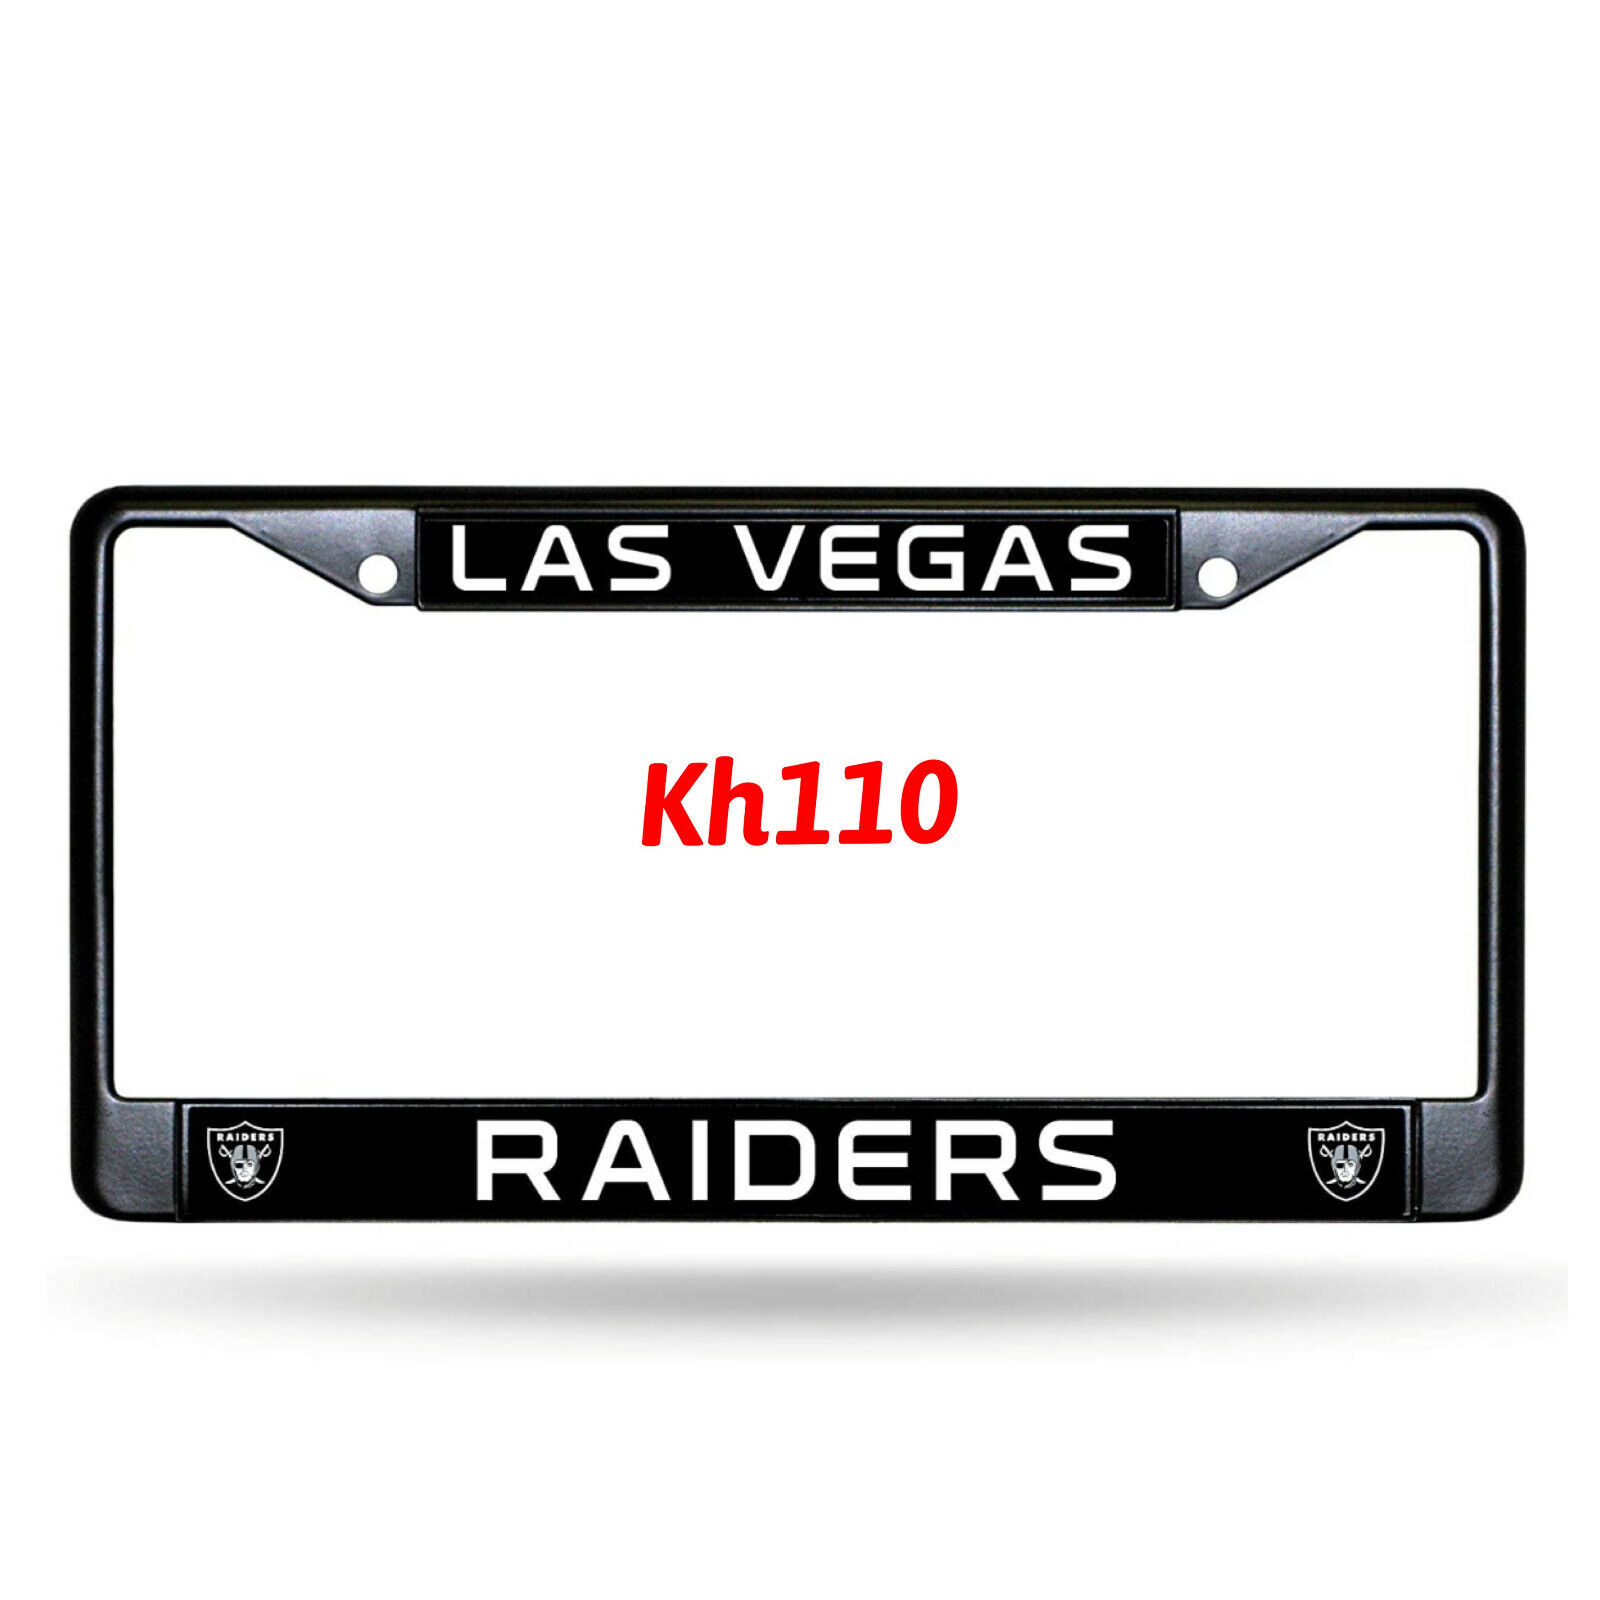 Las Vegas Raiders NFL Standard Chrome License Plate Frame,Black